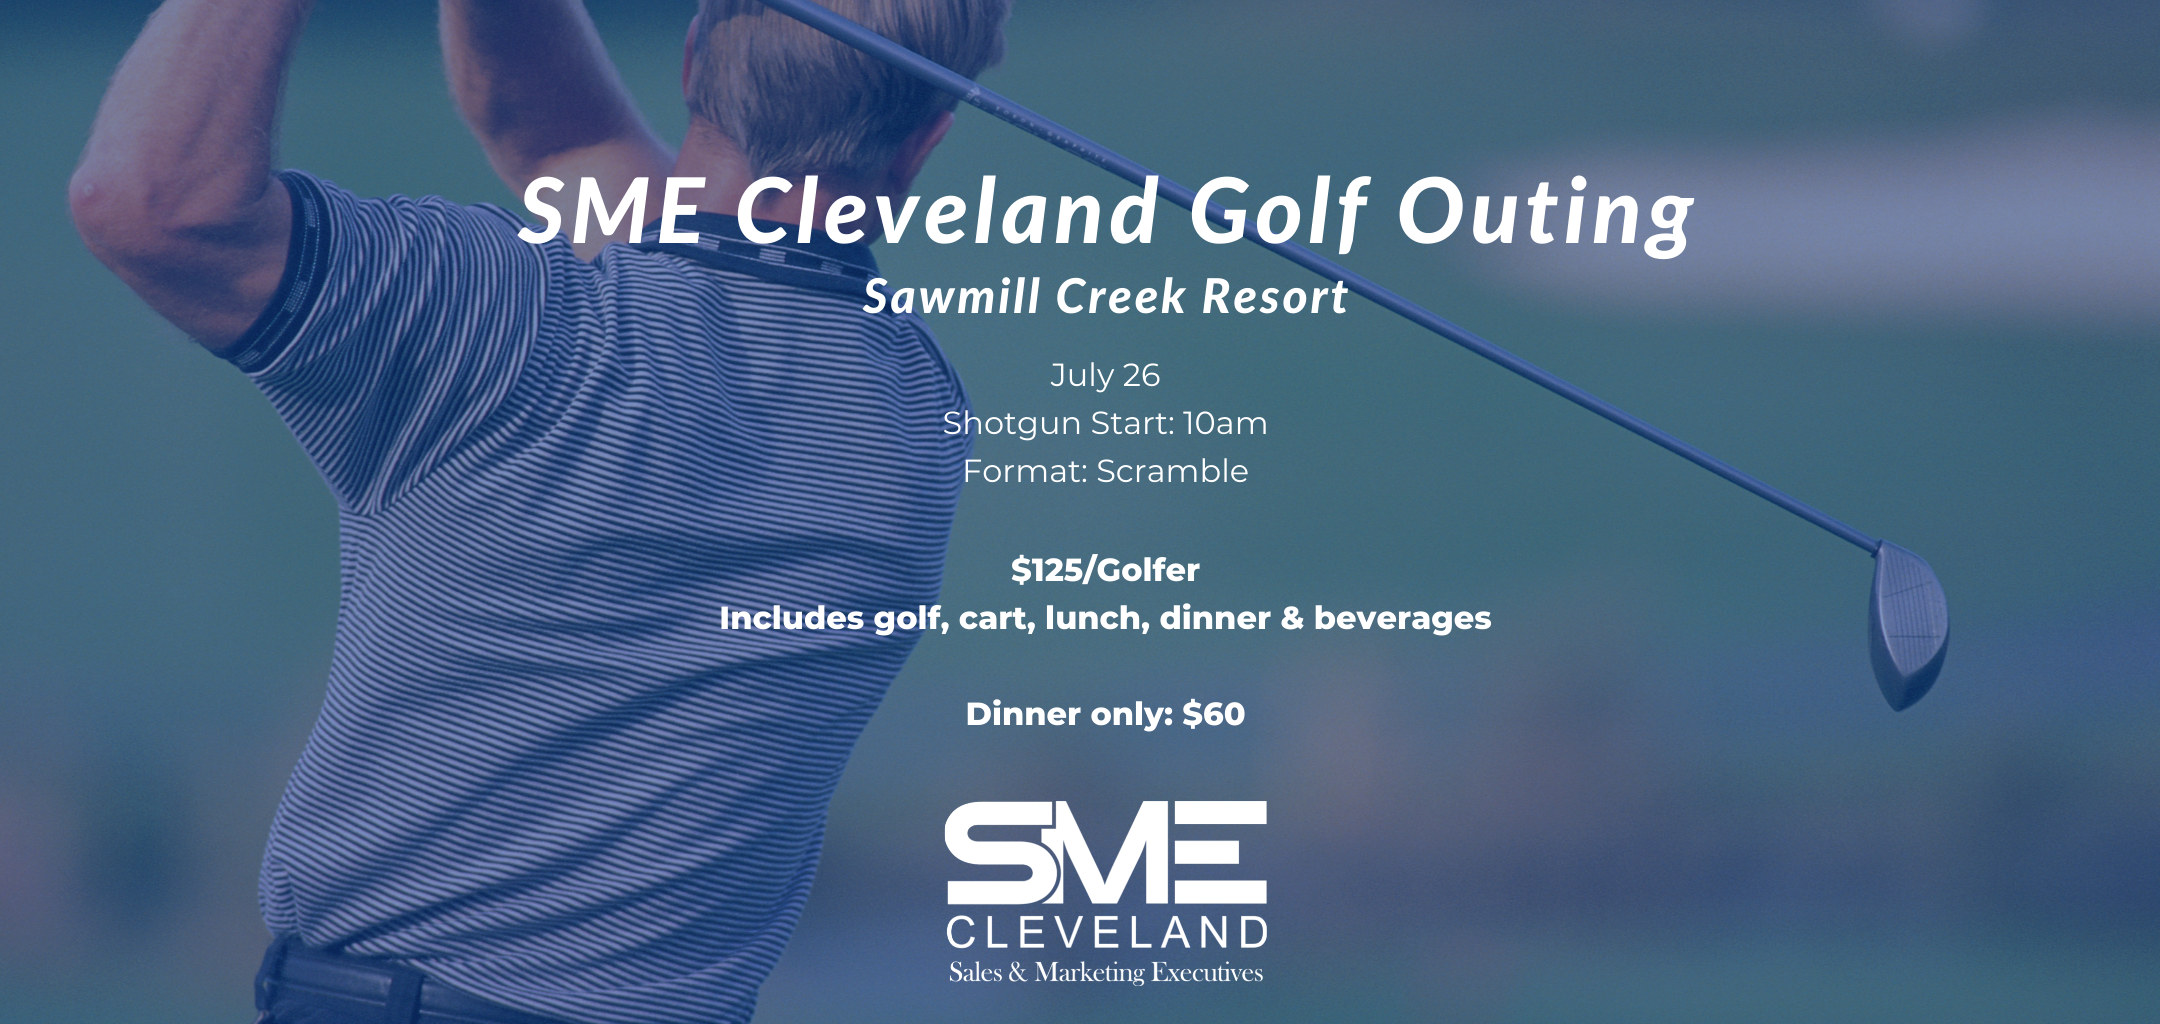 SME Cleveland Golf Outing